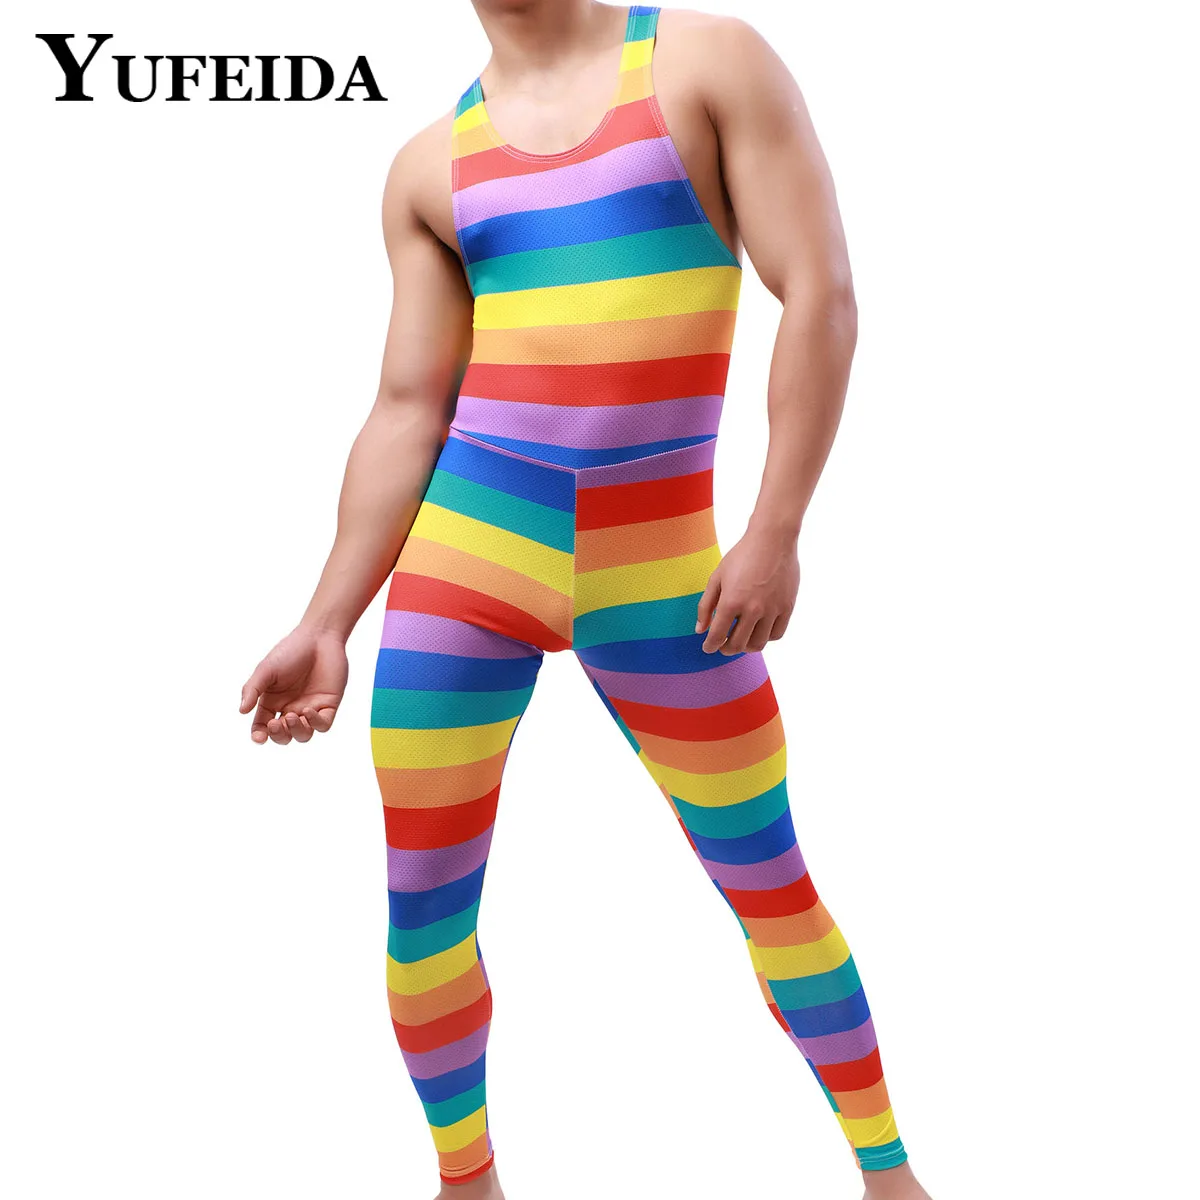 

YUFEIDA Mens Undershirt Leotard Sleeveless Rainbow Printed Jumpsuit Men's Leggings Underwear Bodysuit Wrestling Singlet Pajamas